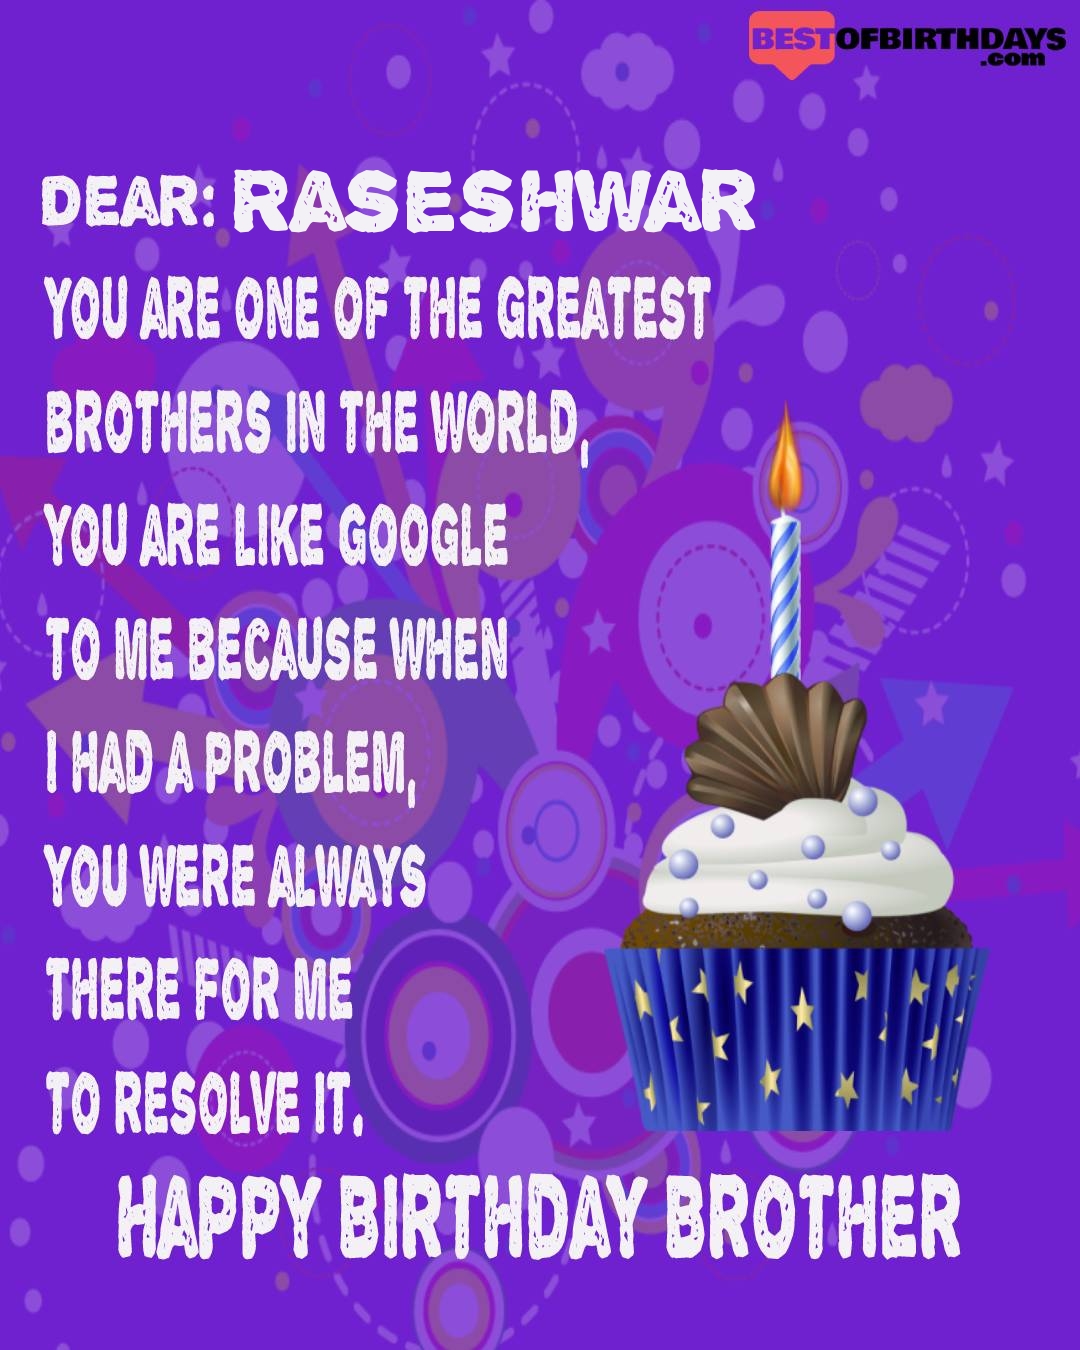 Happy birthday raseshwar bhai brother bro